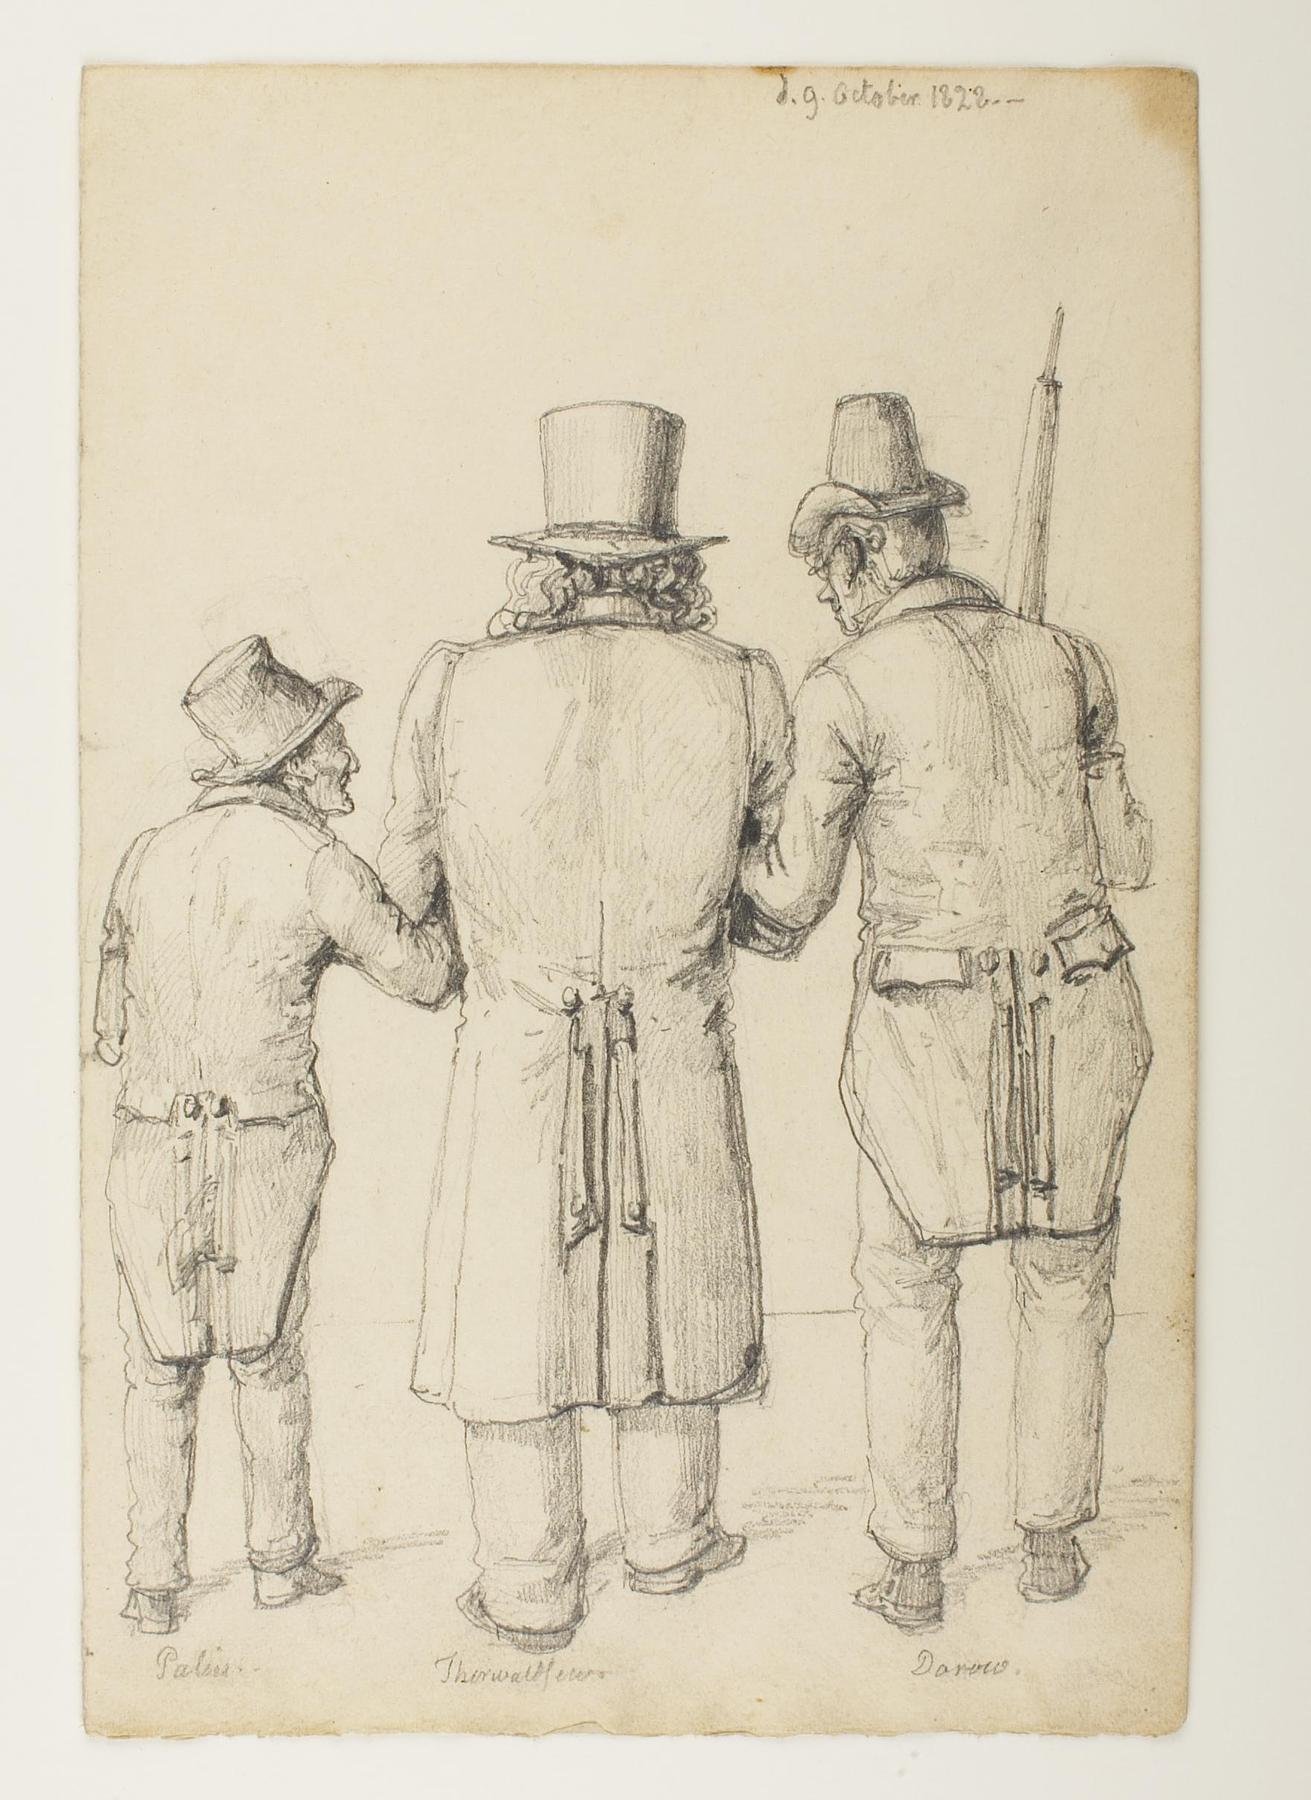 Count Nils Gustav Palin, Thorvaldsen and the archeologist Wilhelm Dorow, D1870